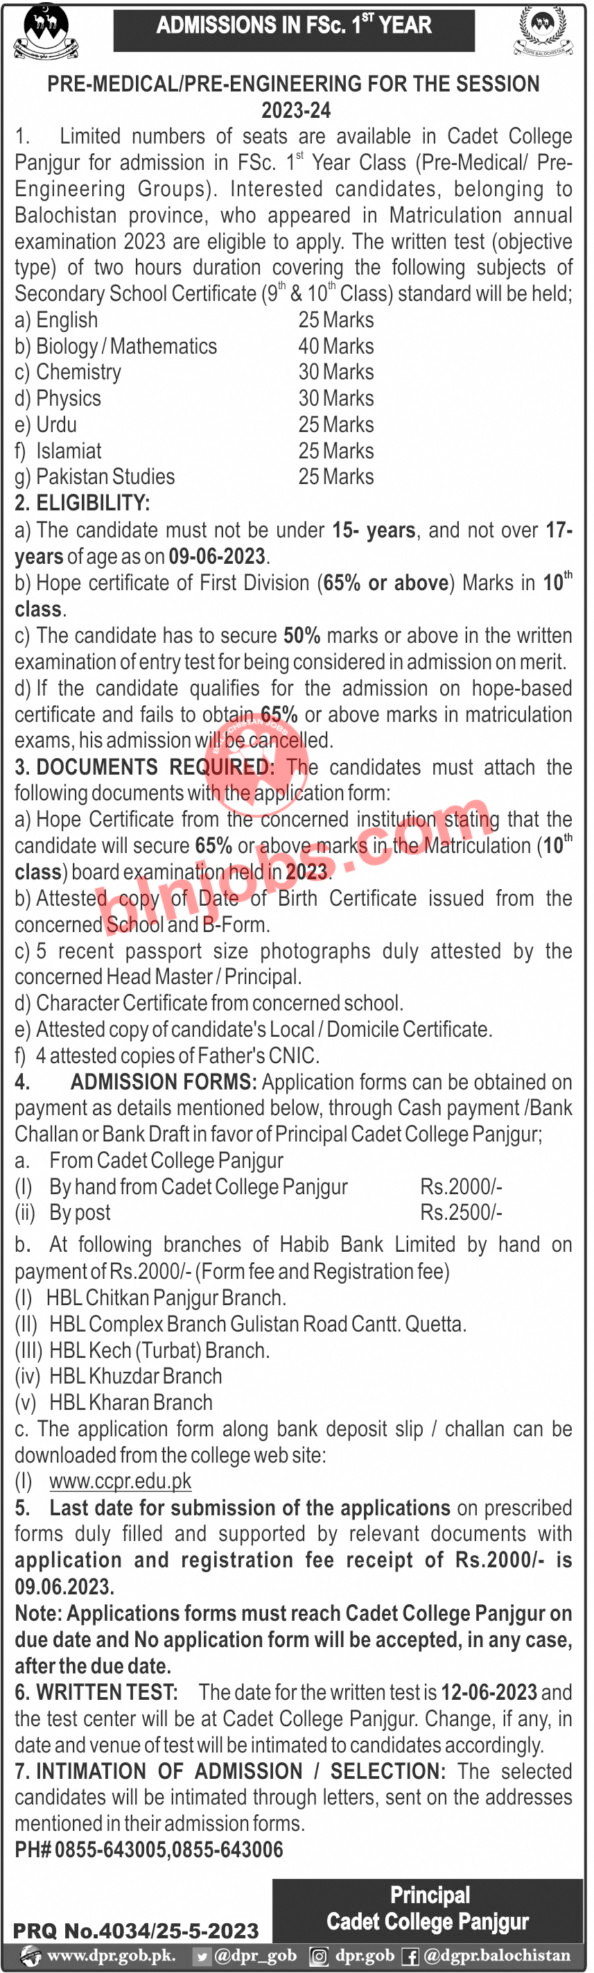 Cadet College Panjgur Admissions 2023